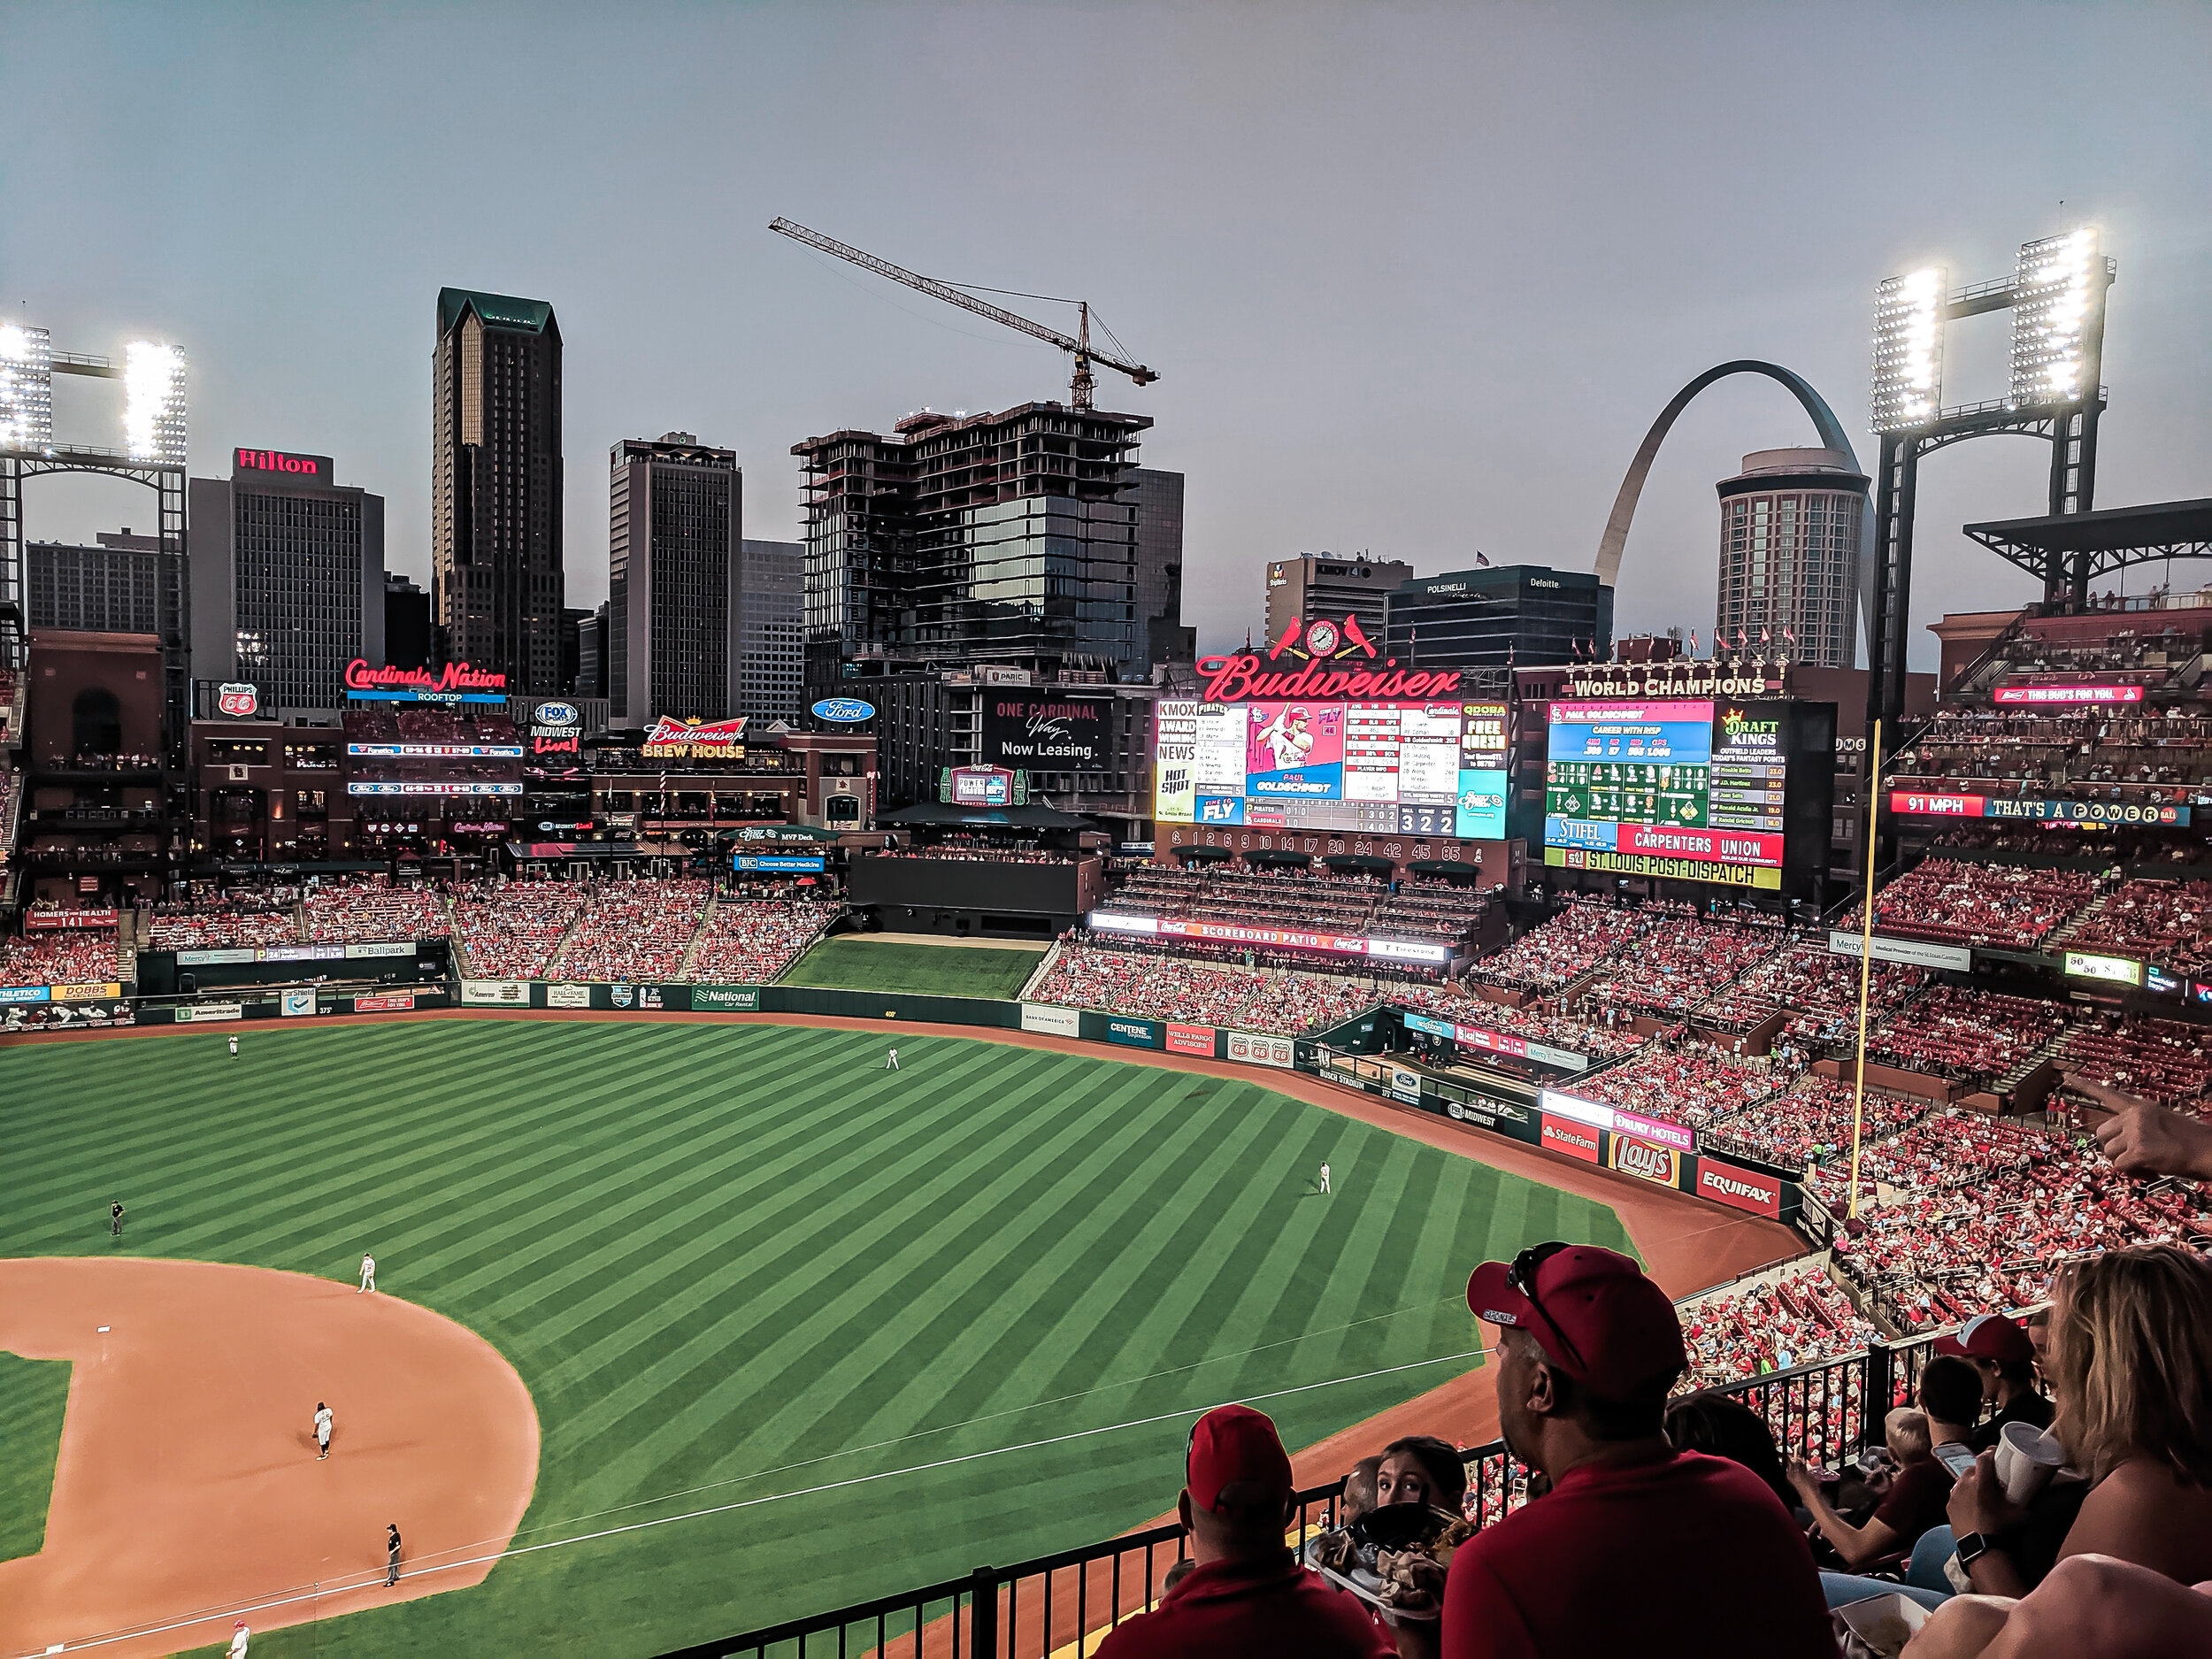 St. Louis Cardinal's Baseball Game Date Night